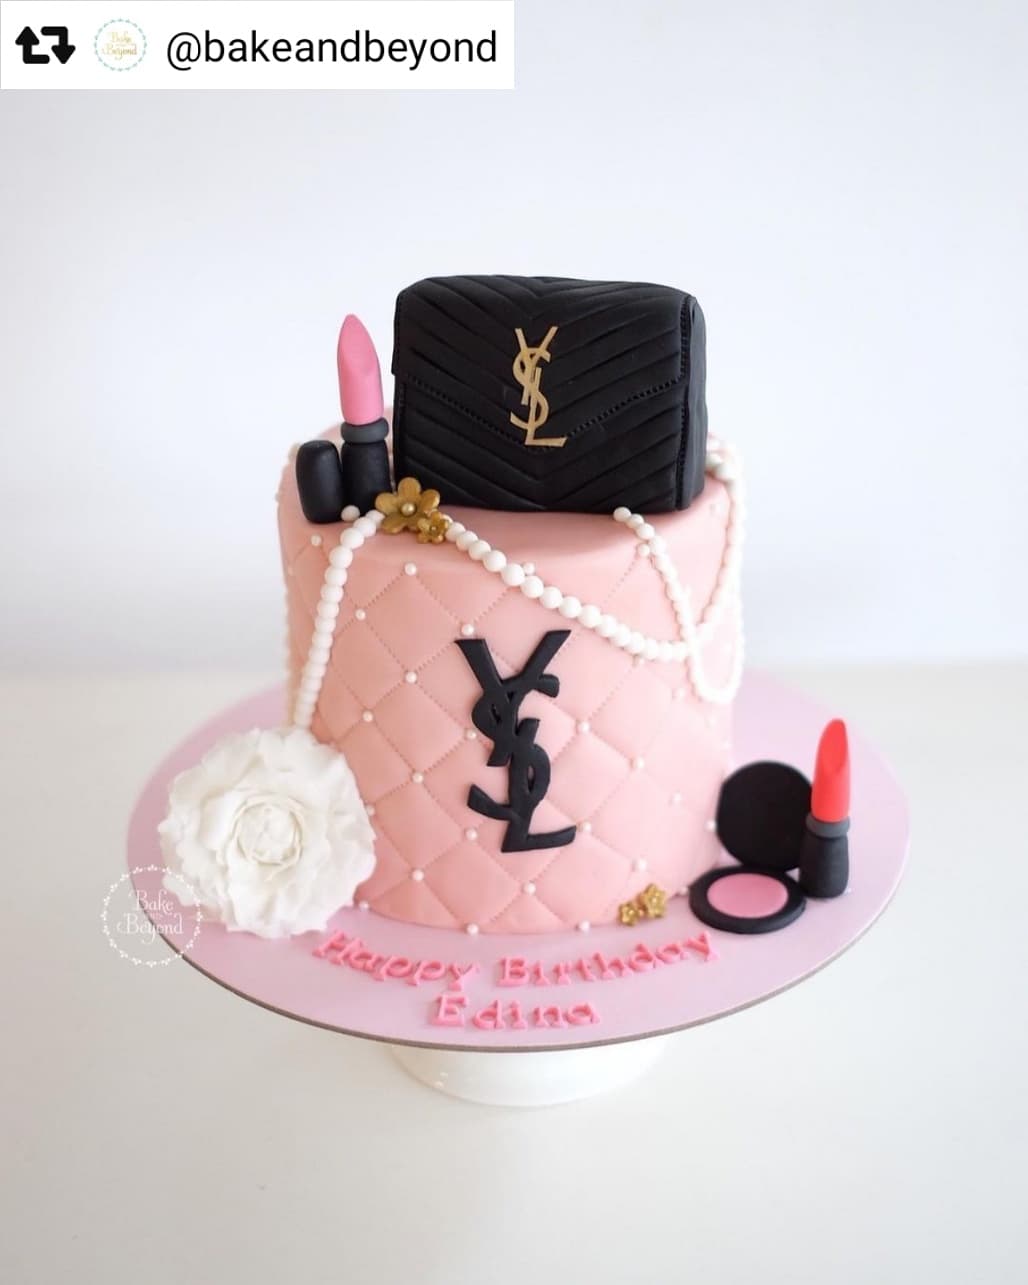 YSL Bag Cake